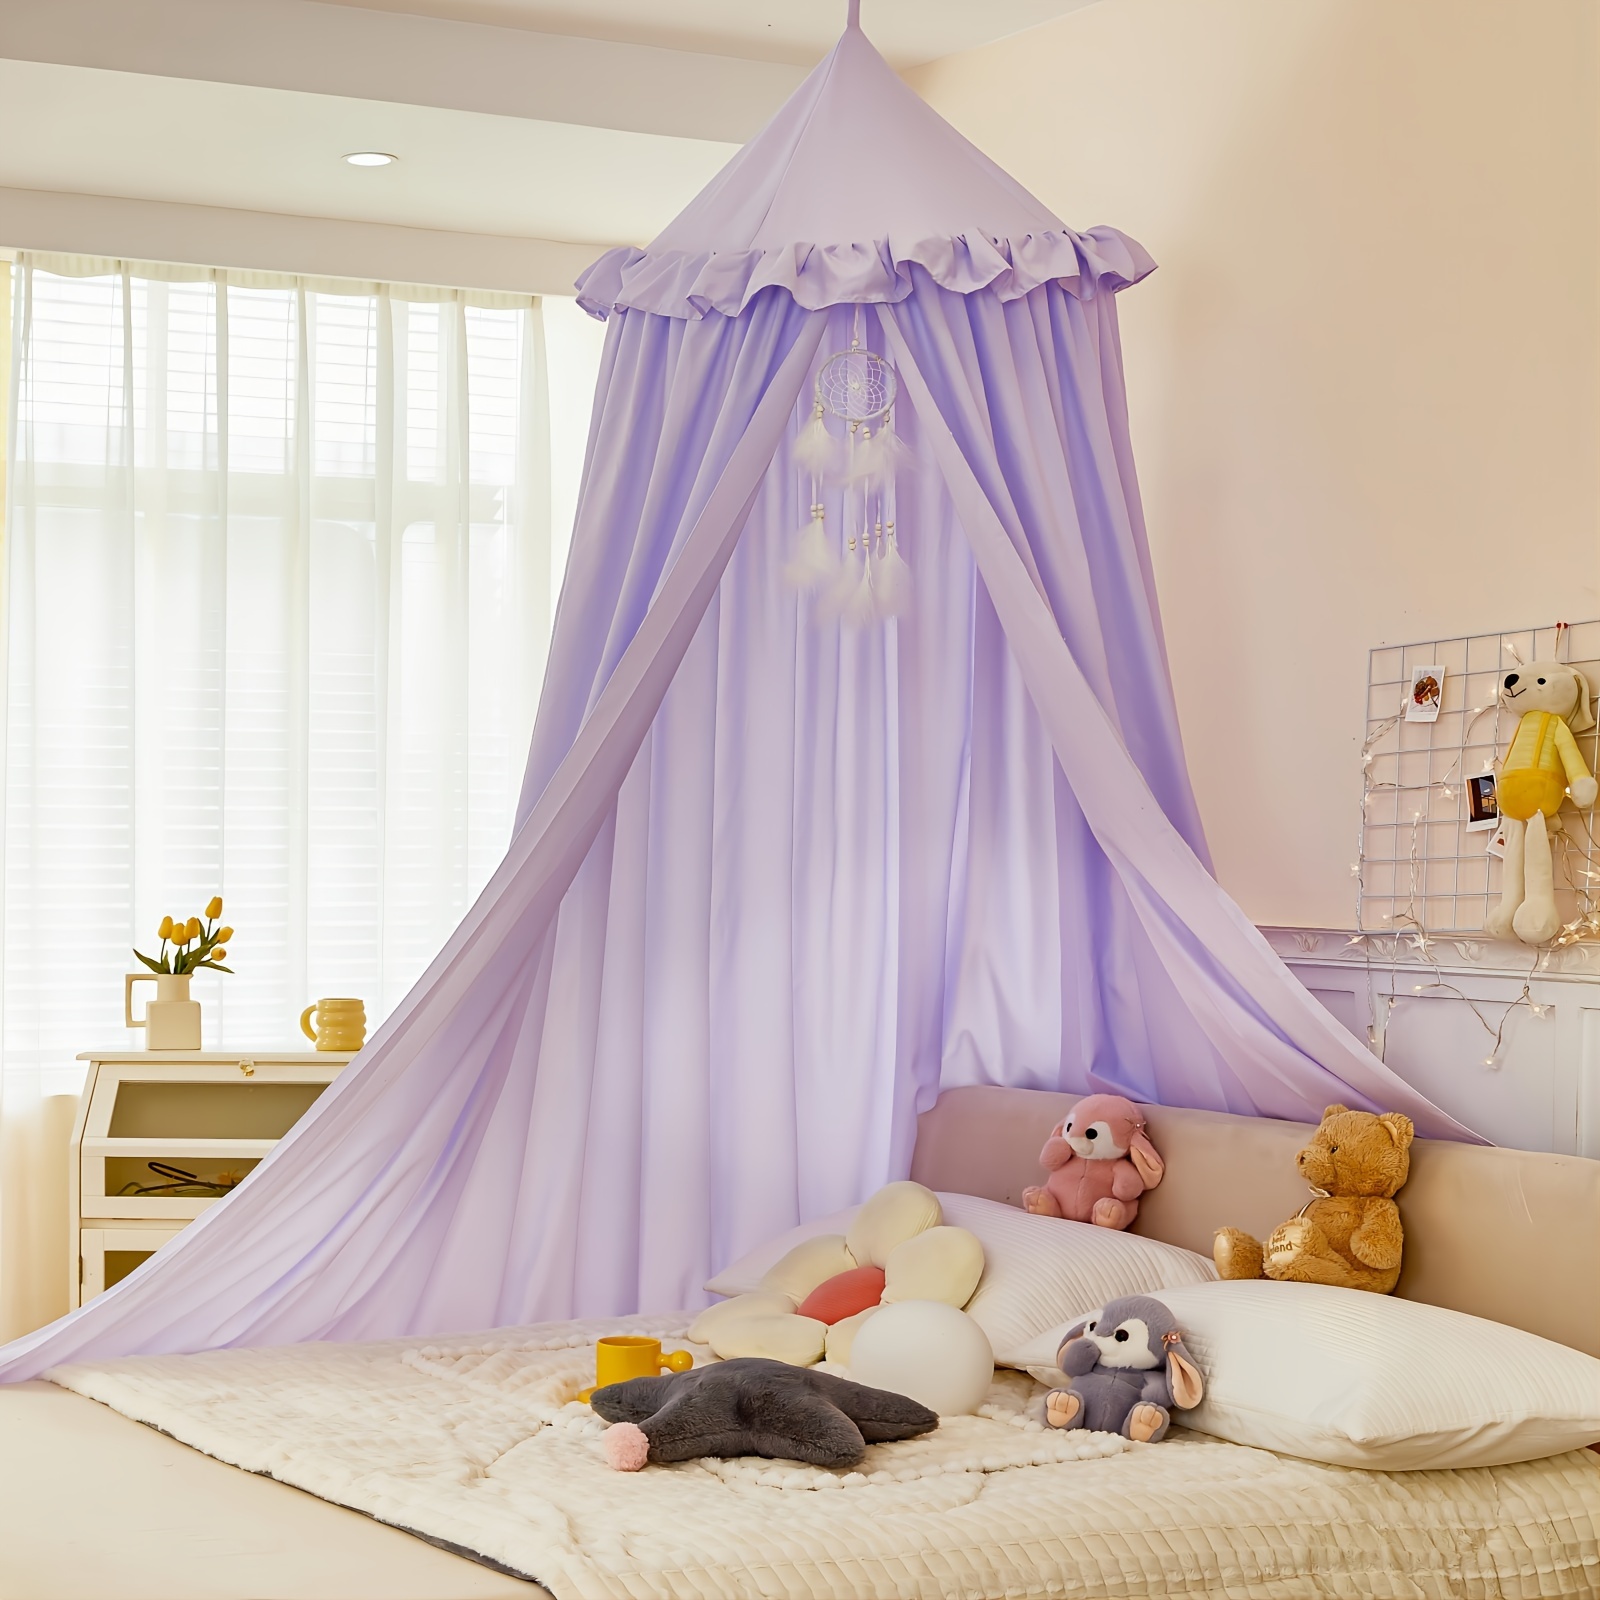 Doseles mosquitera para camas infantiles - DecoPeques